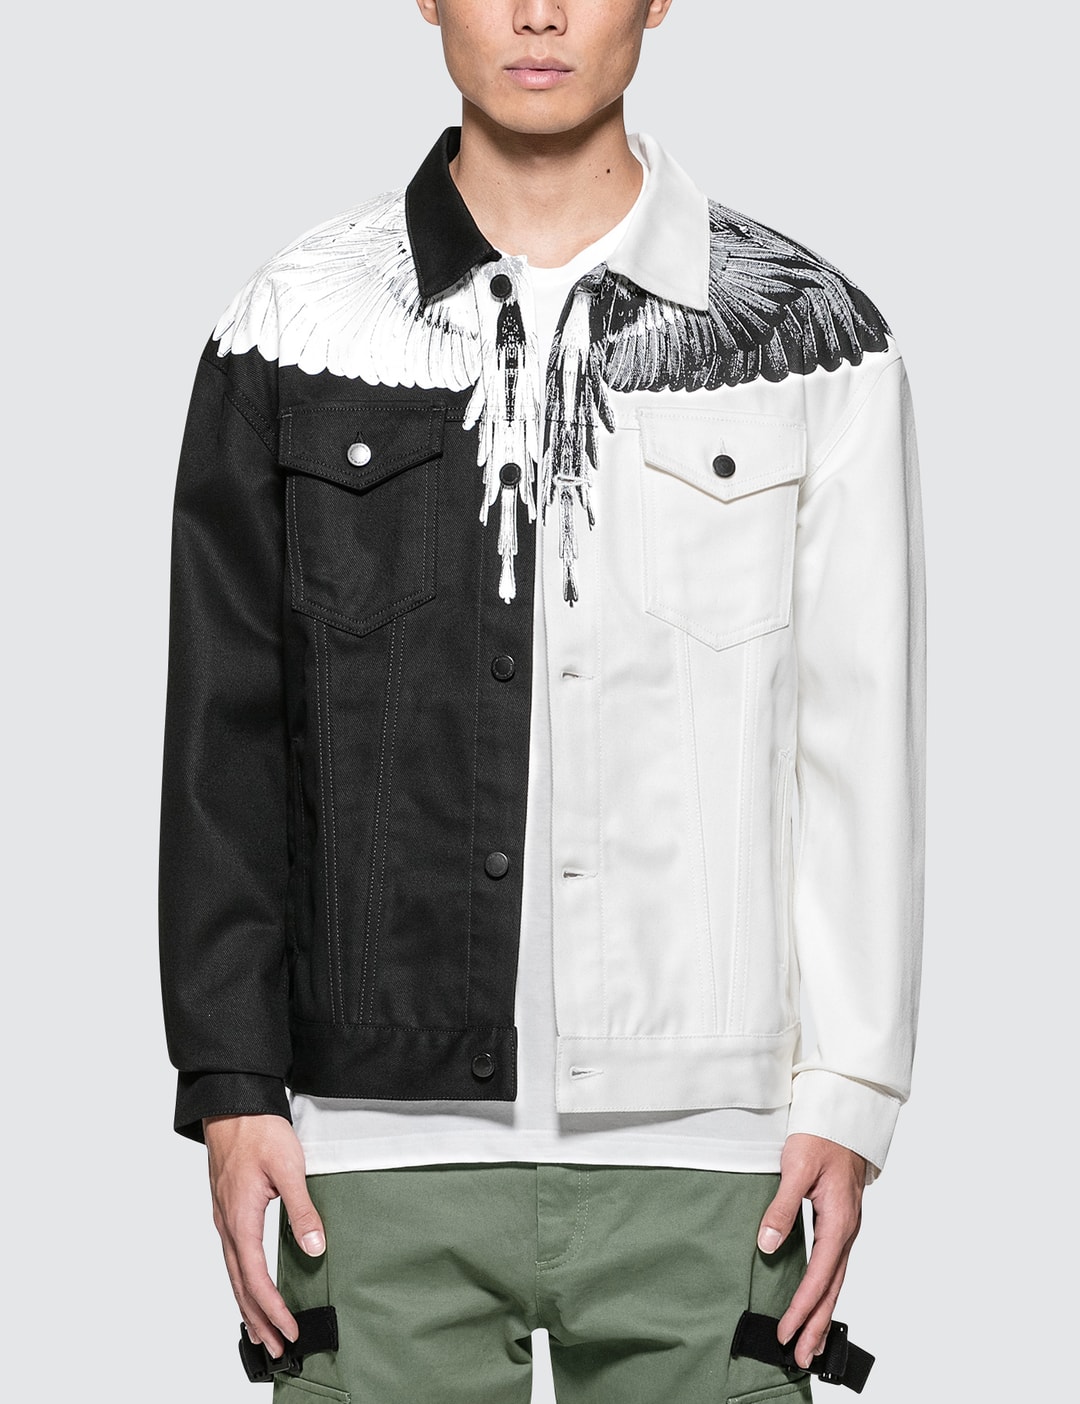 Etna zin Expliciet Marcelo Burlon - Aish Denim Jacket | HBX - Globally Curated Fashion and  Lifestyle by Hypebeast